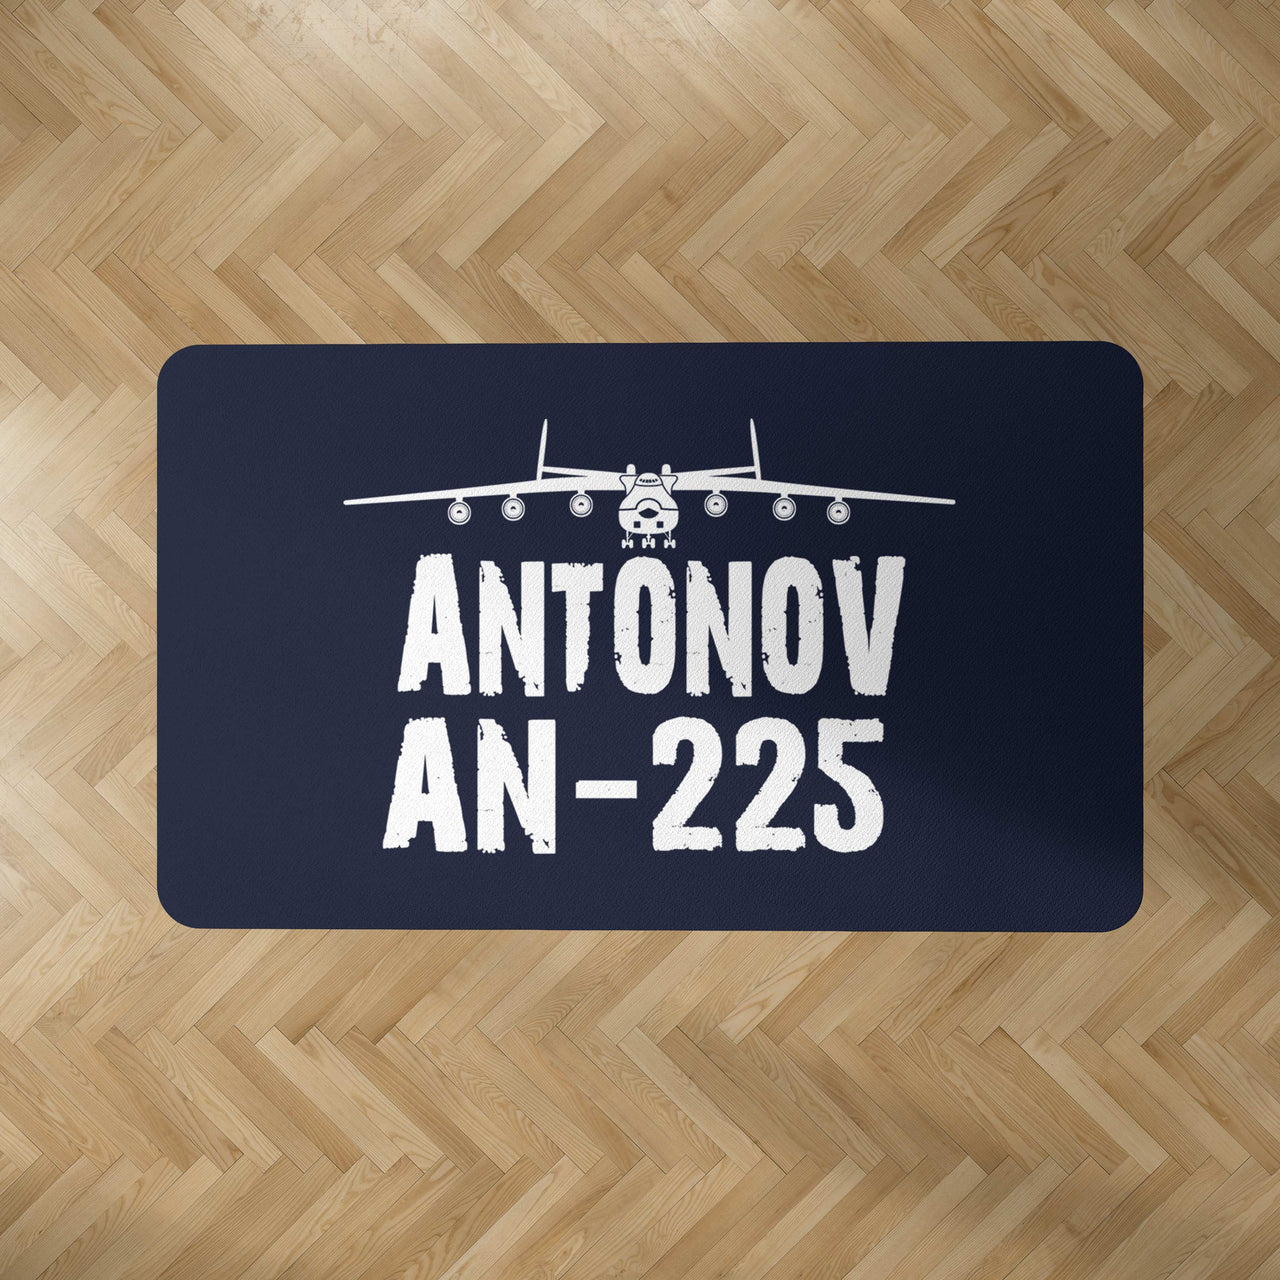 Antonov AN-225 & Plane Designed Carpet & Floor Mats